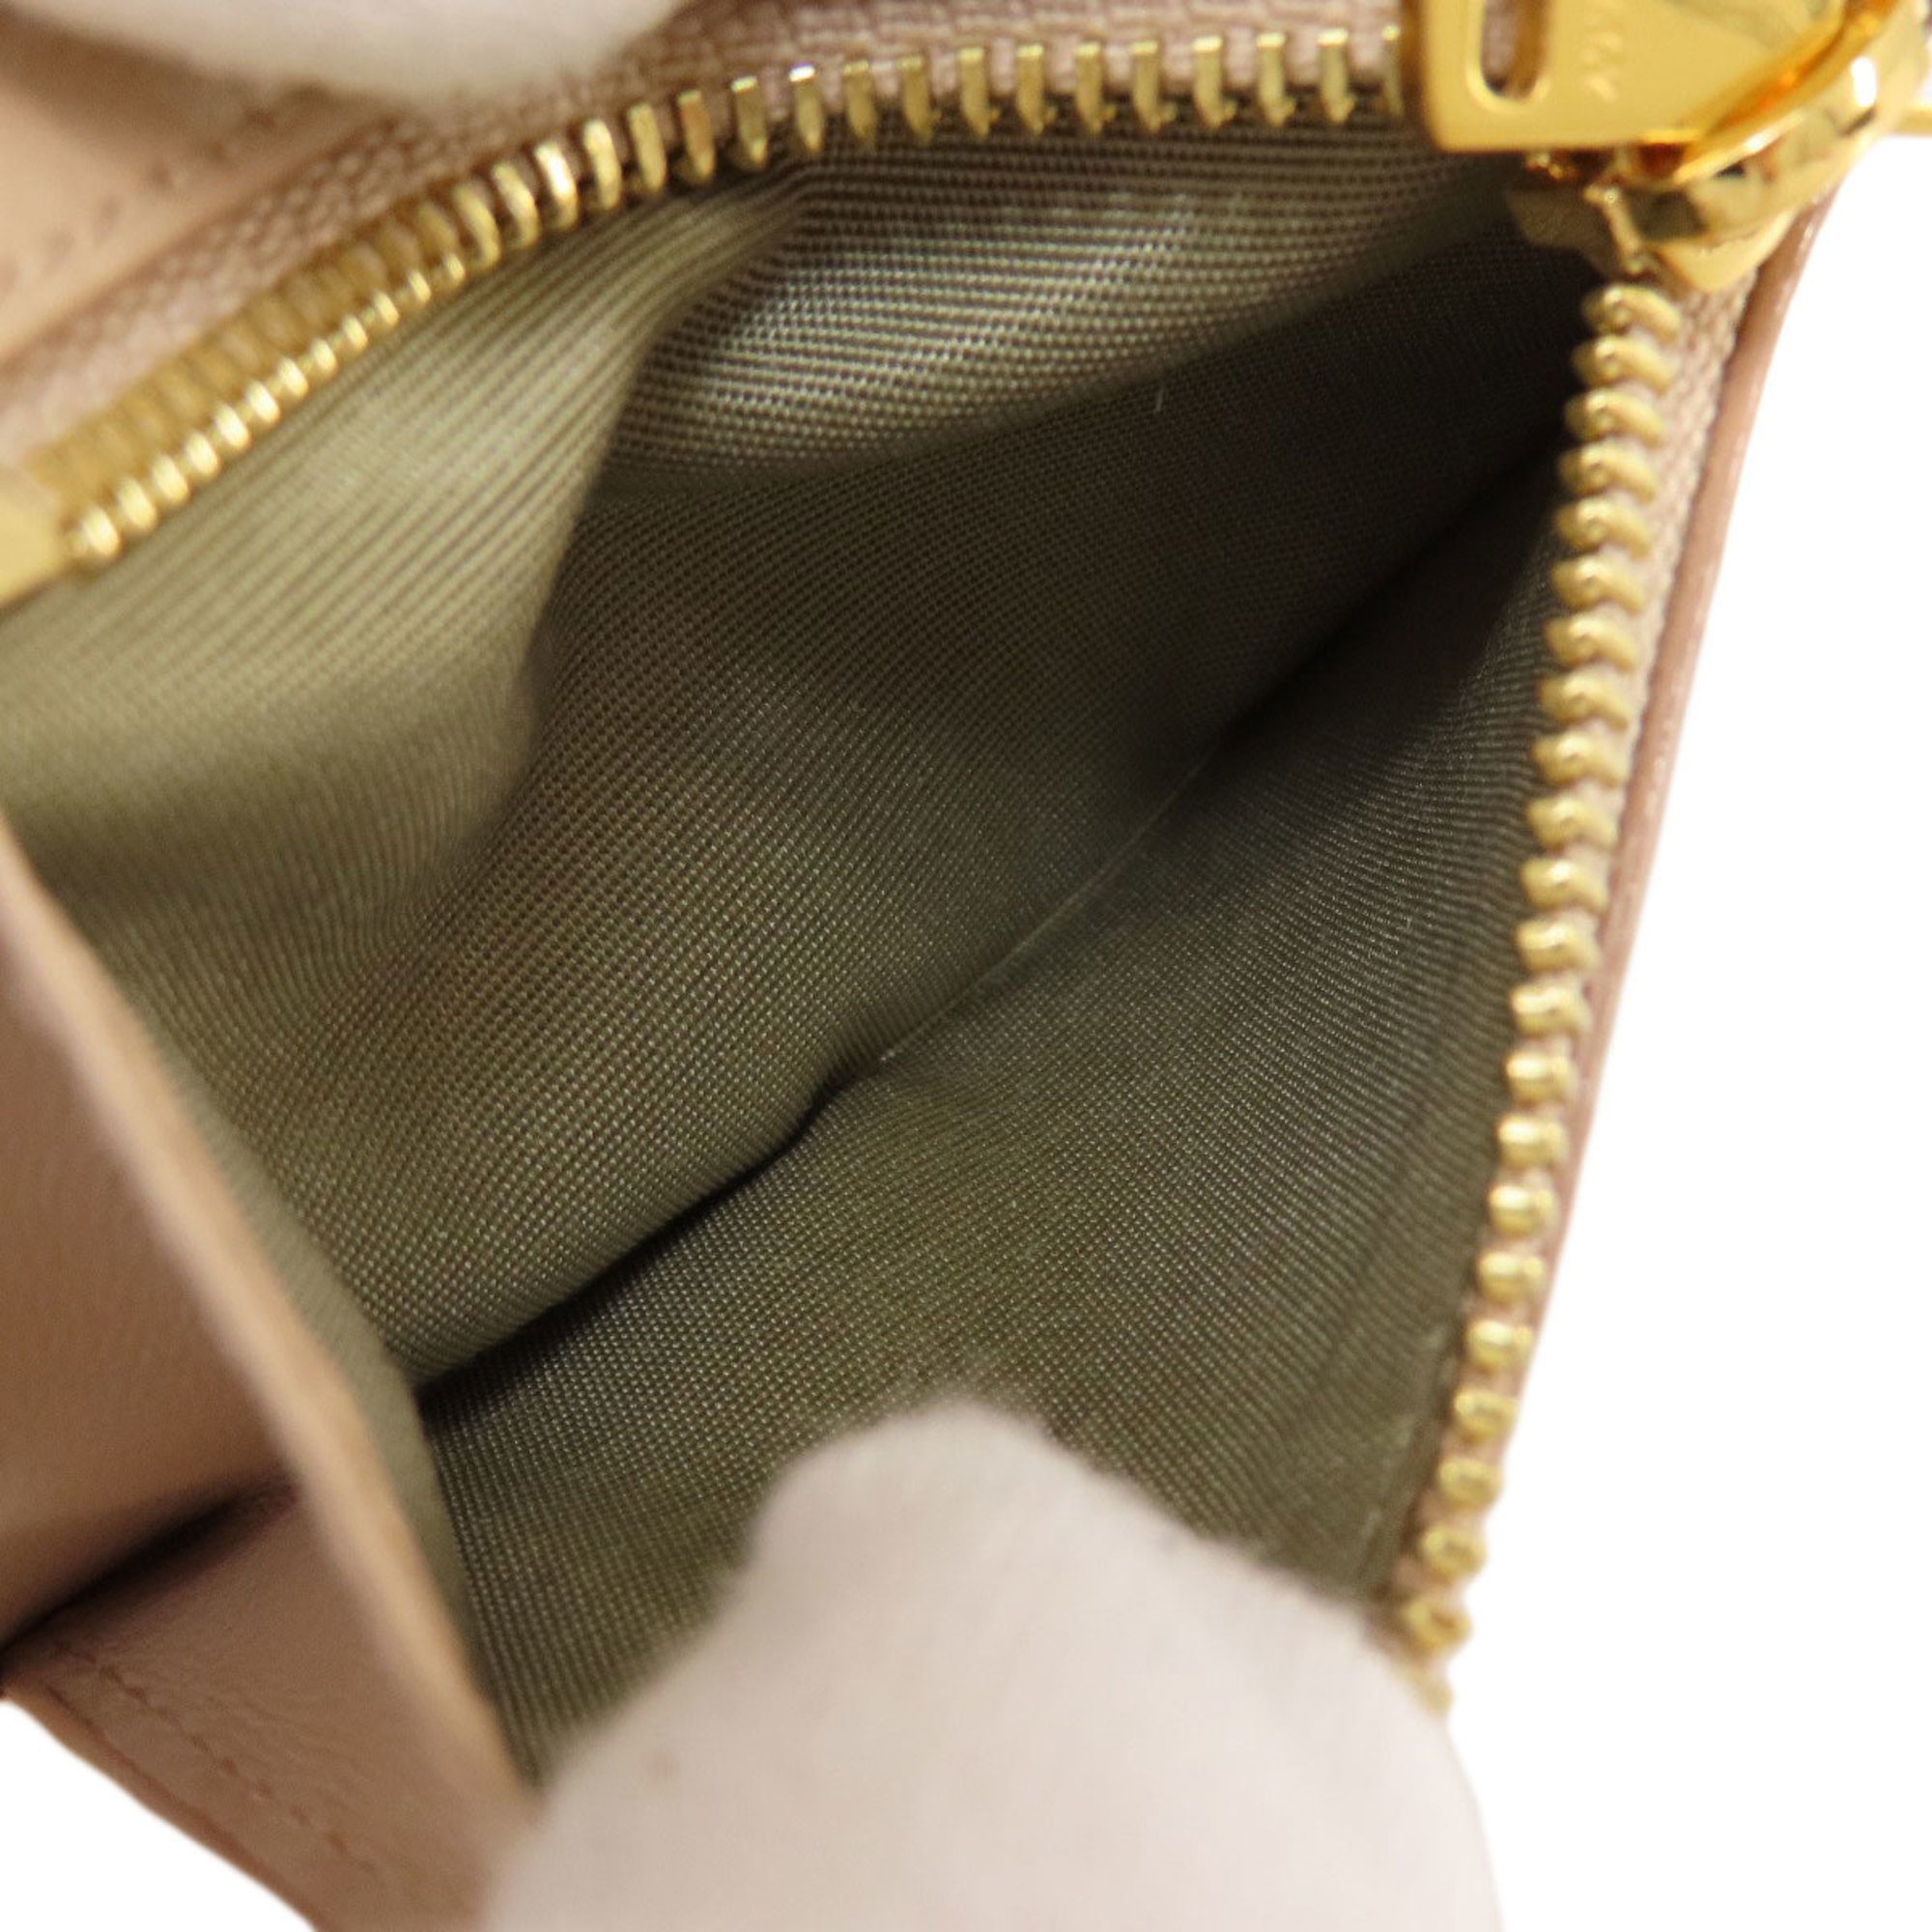 BALLY Metal fittings Compact wallet Bi-fold Leather Women's